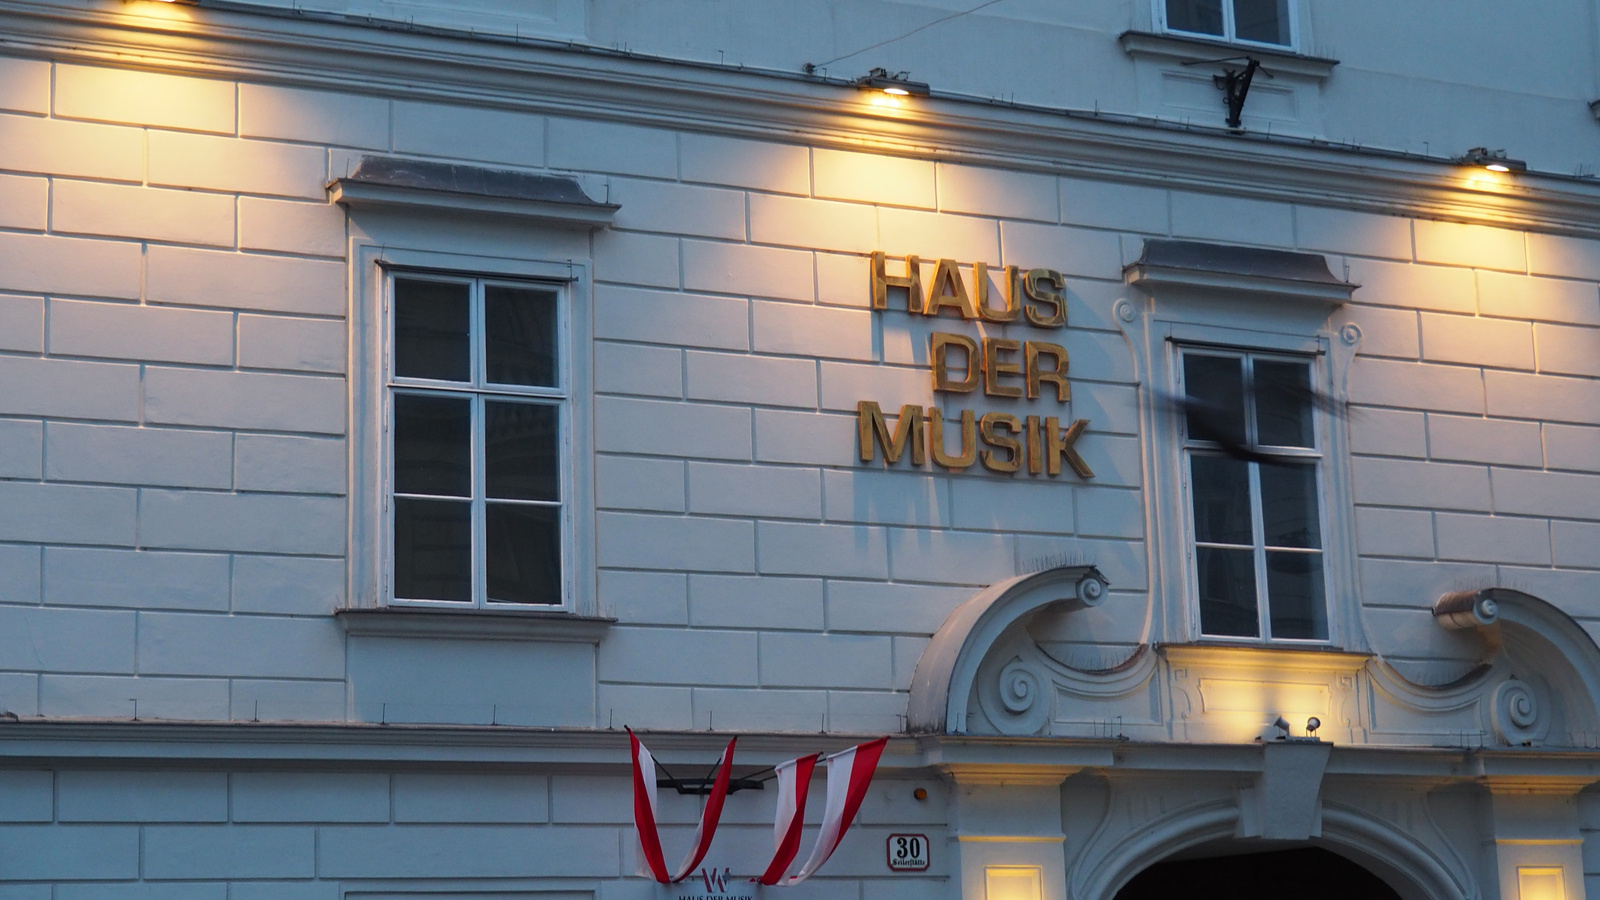 Ausztria, Bécs, Haus der Musik, SzG3